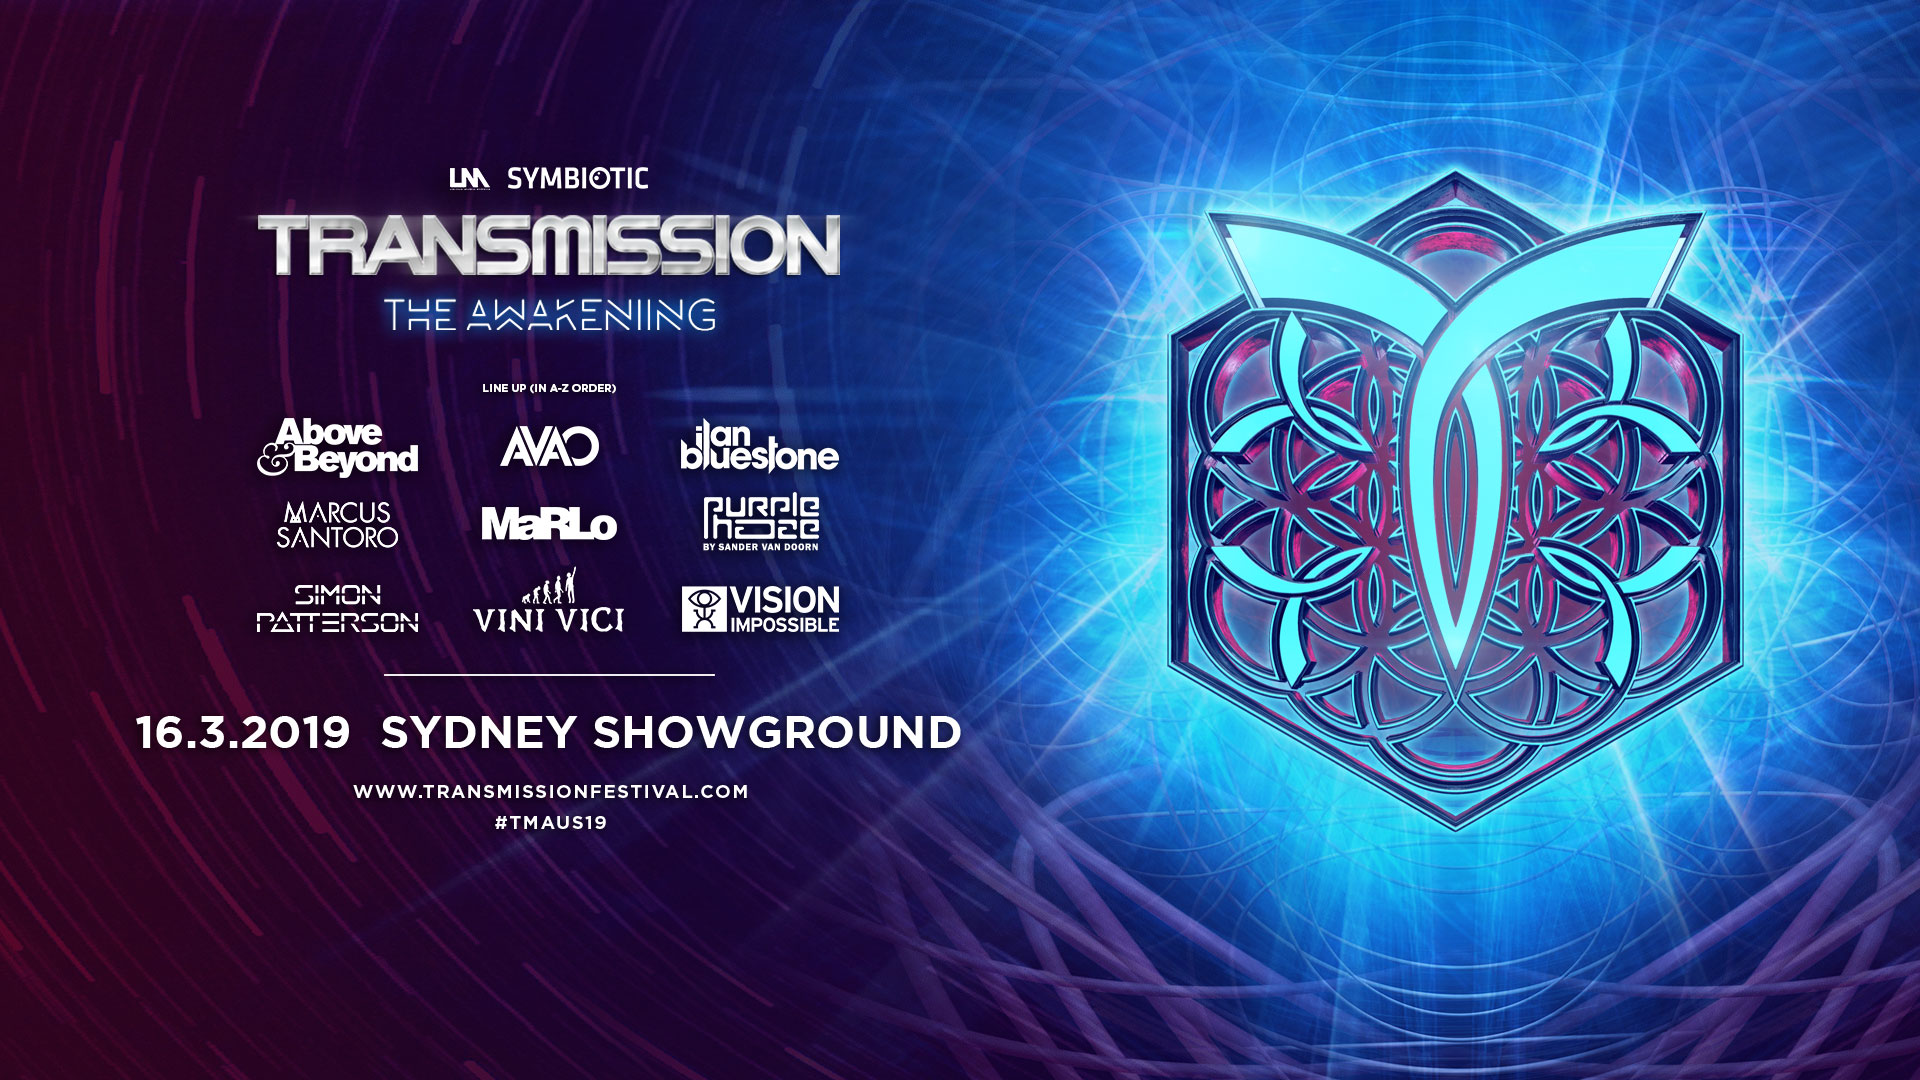 Simon Patterson - Live @ Awakening Transmission (Sydney Showground, Australia) - 16 March 2019